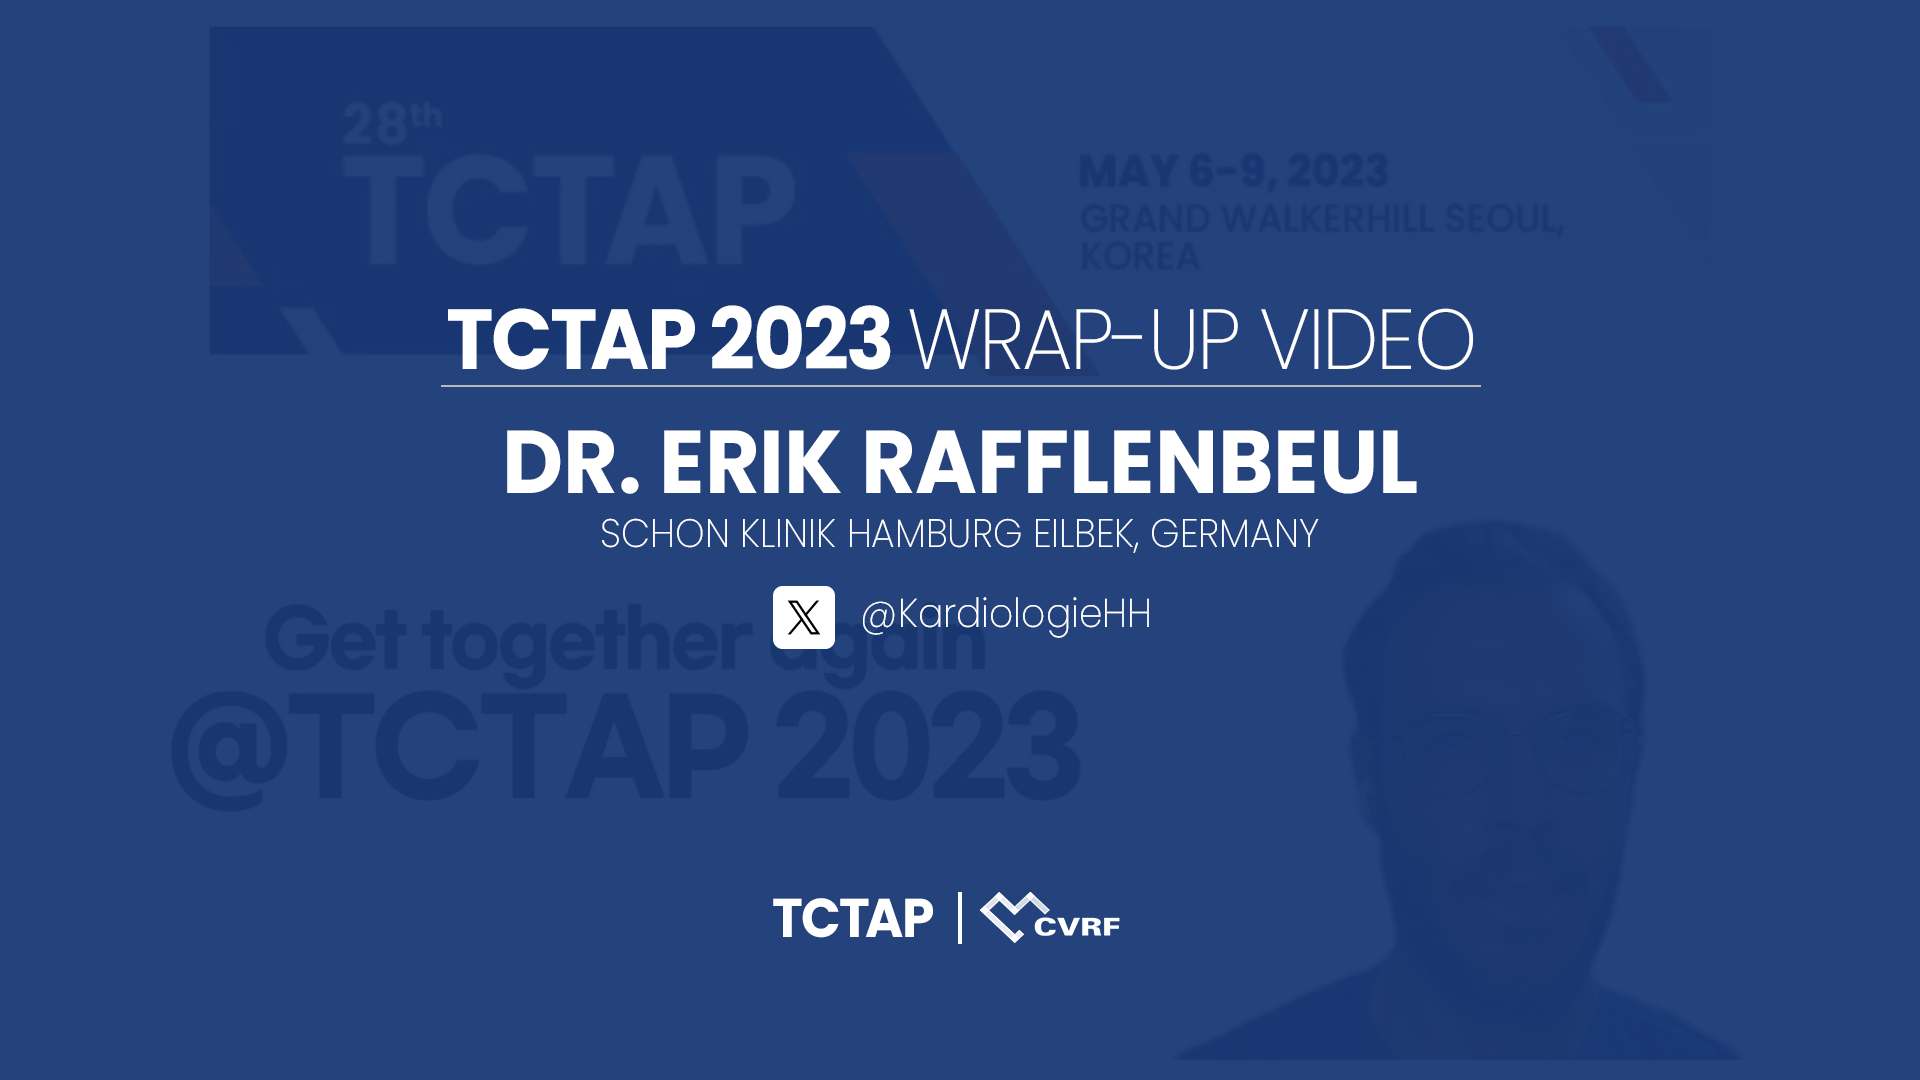 TCTAP 2023 Wrap-up Video from Dr. Erik Rafflenbeul